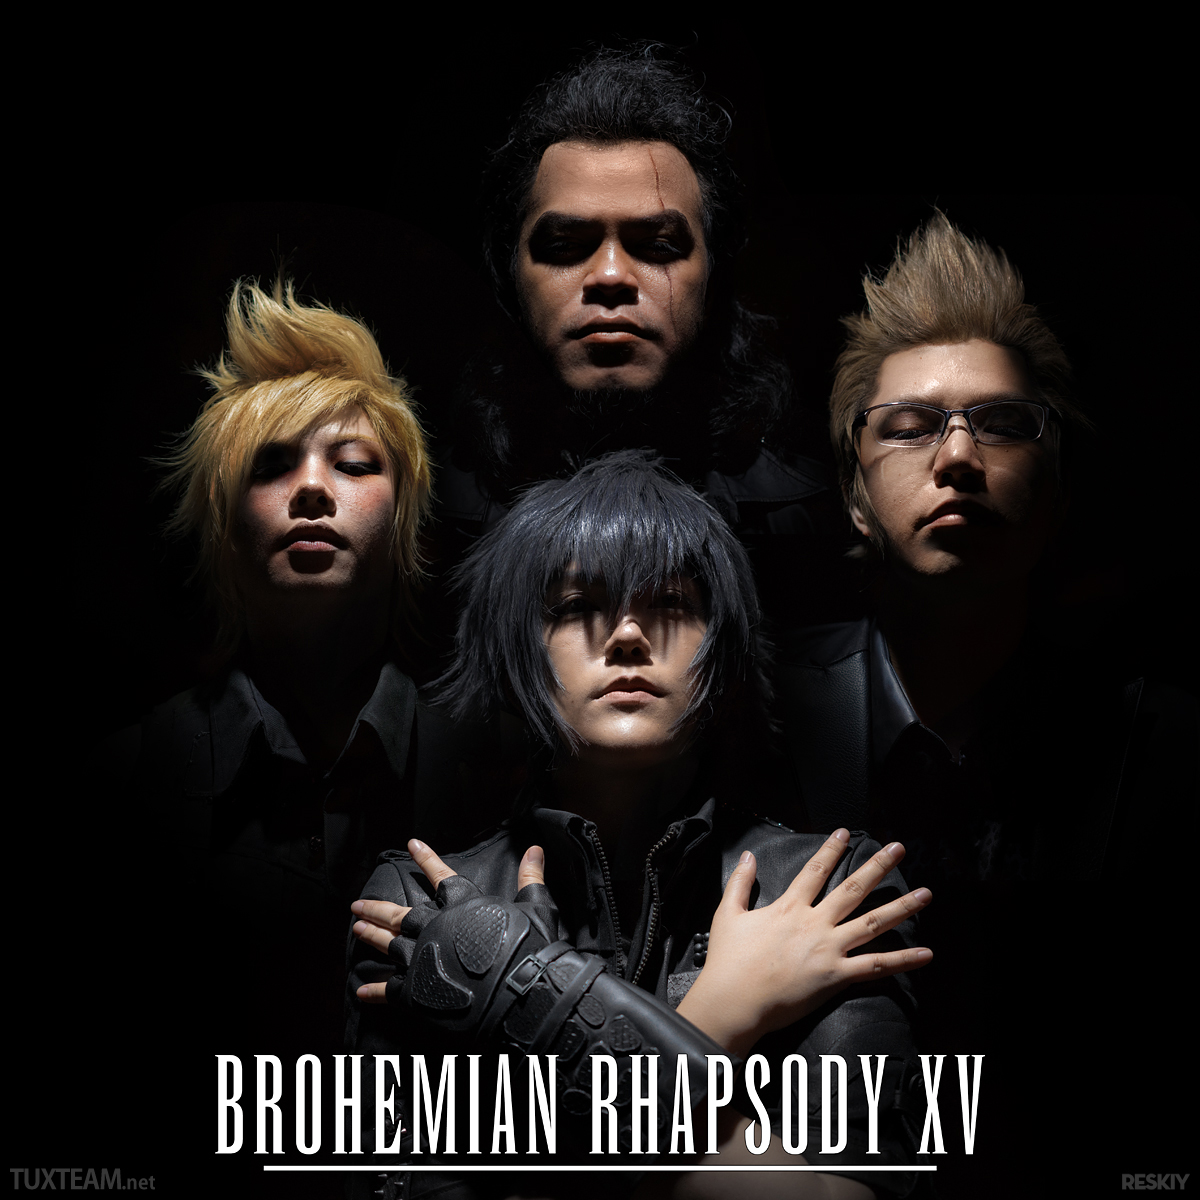 Brohemian Rhapsody XV